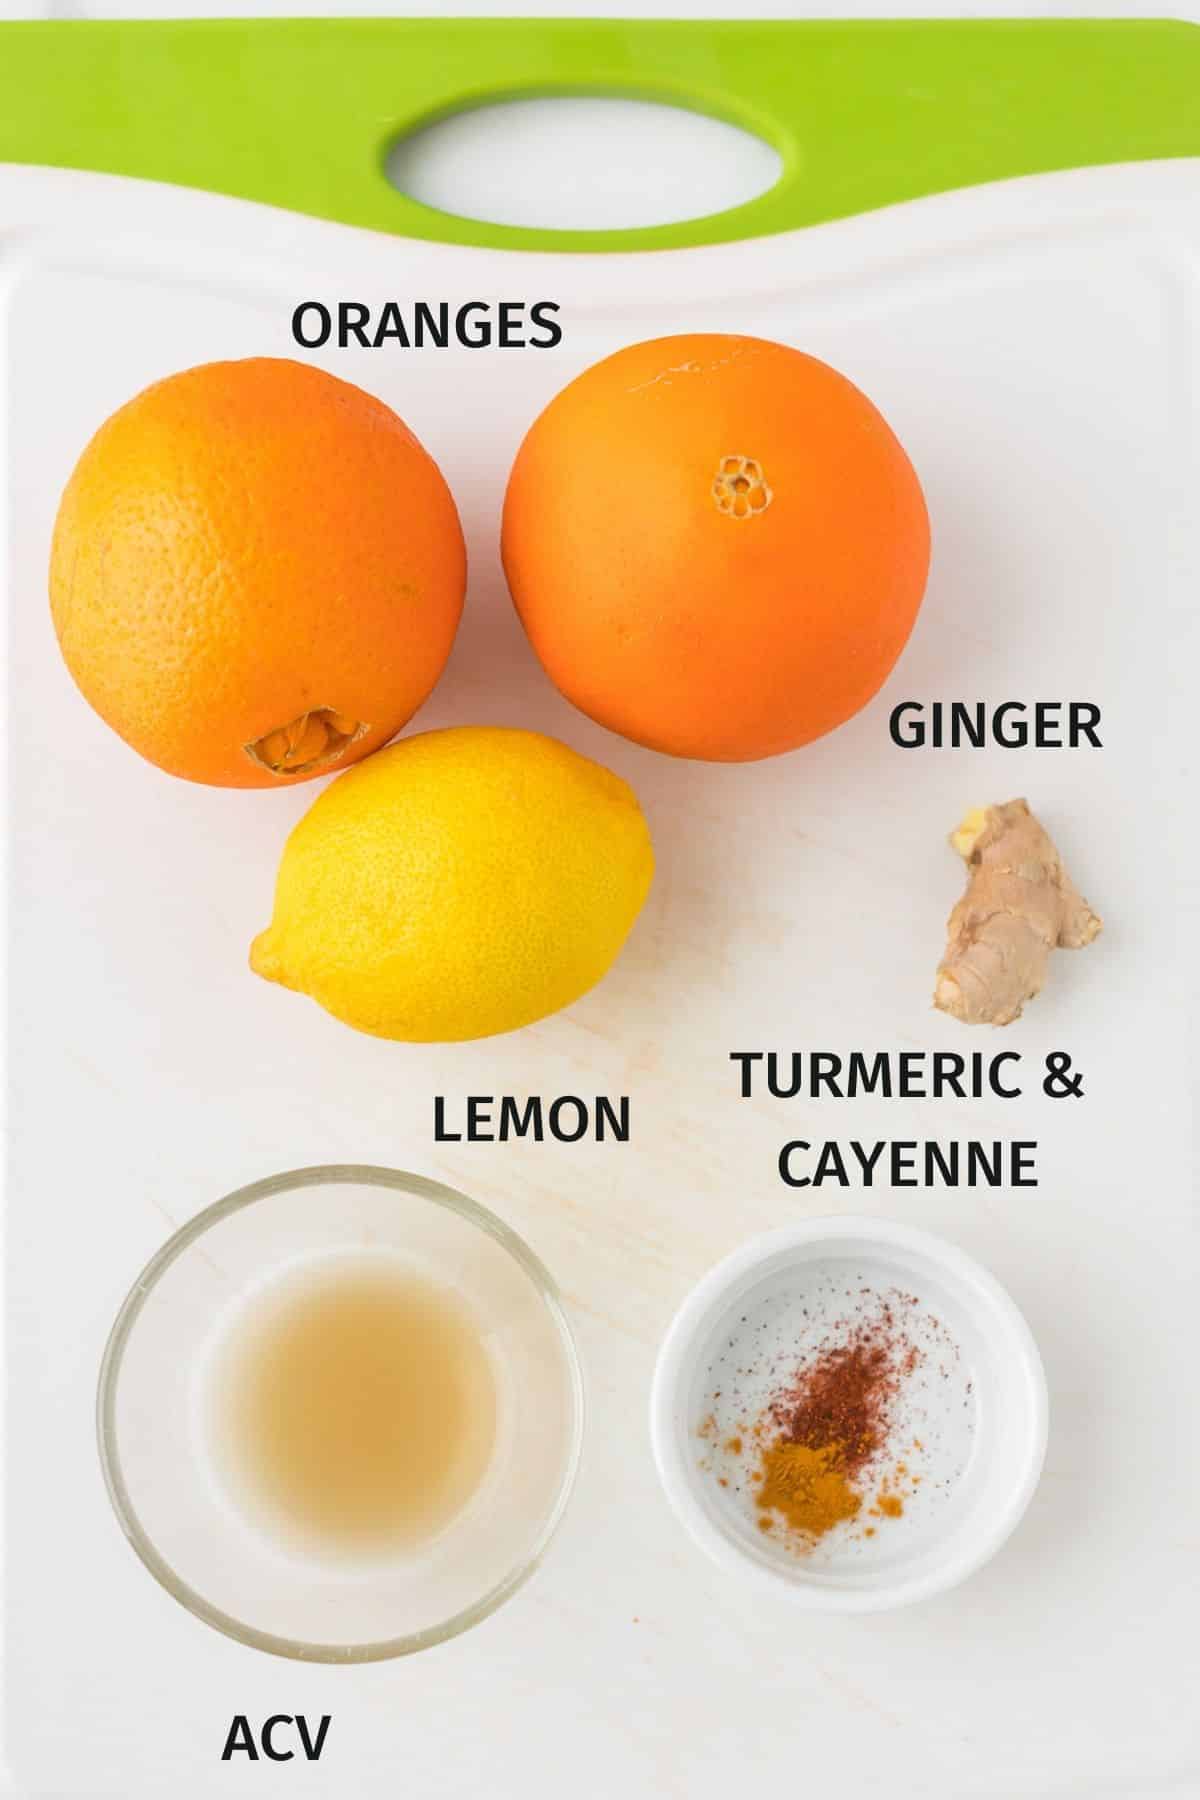 labeled ingredients for lemon ginger immunity shot.